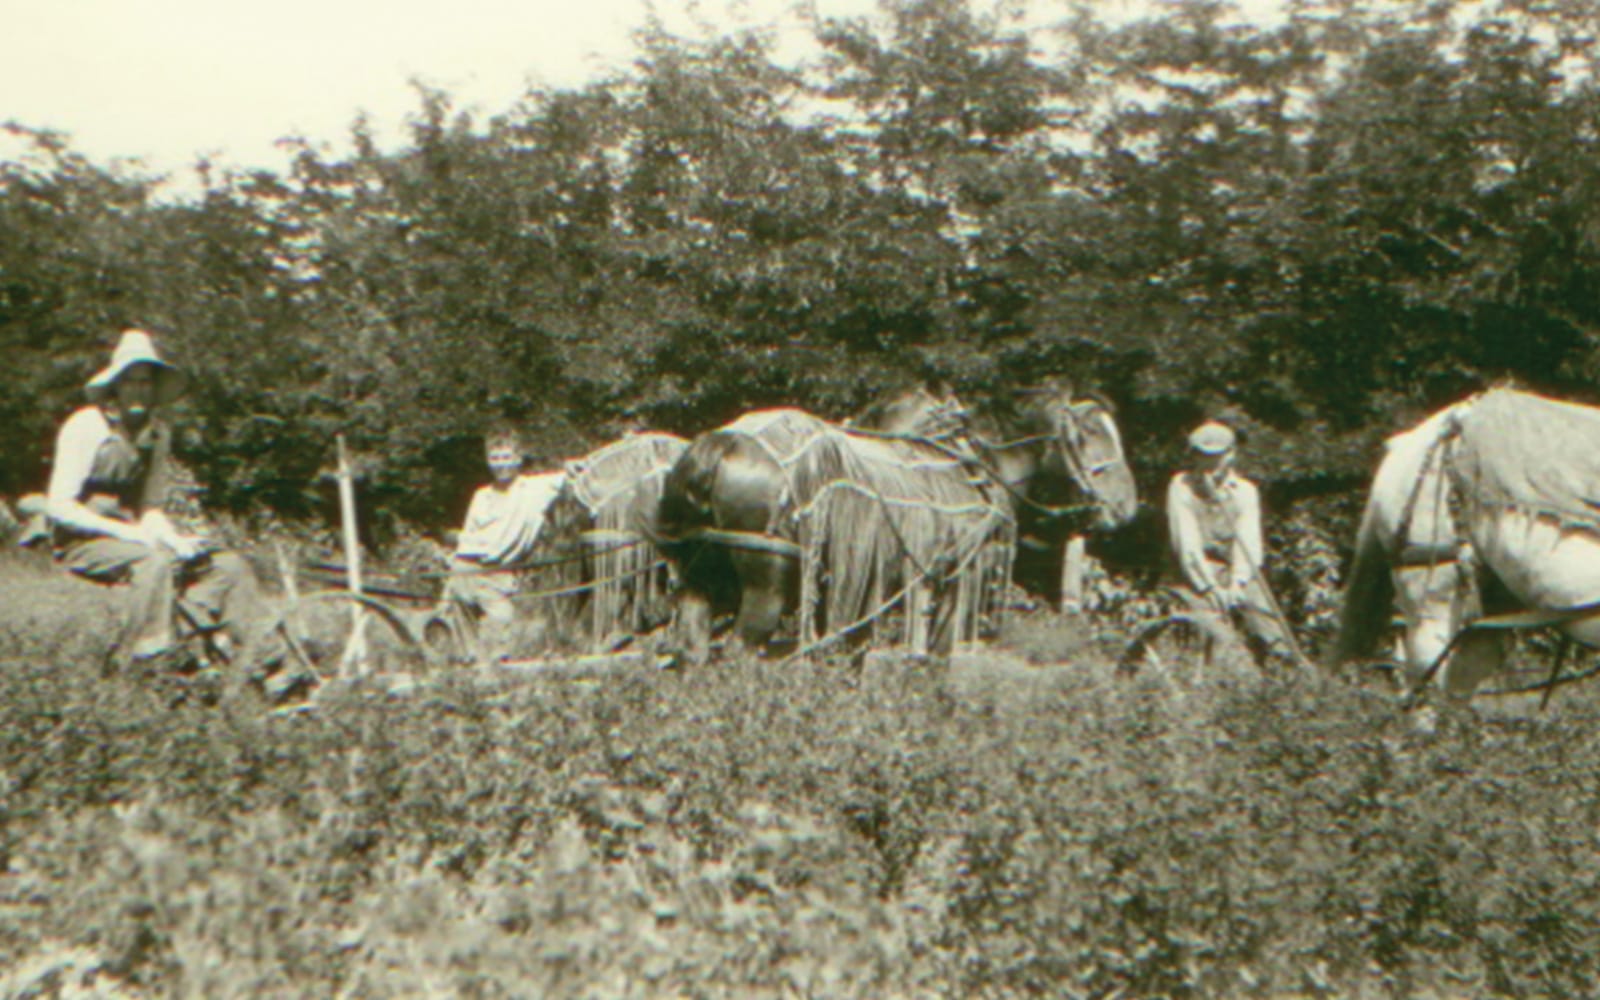 Edward Christensen farming on the ranch